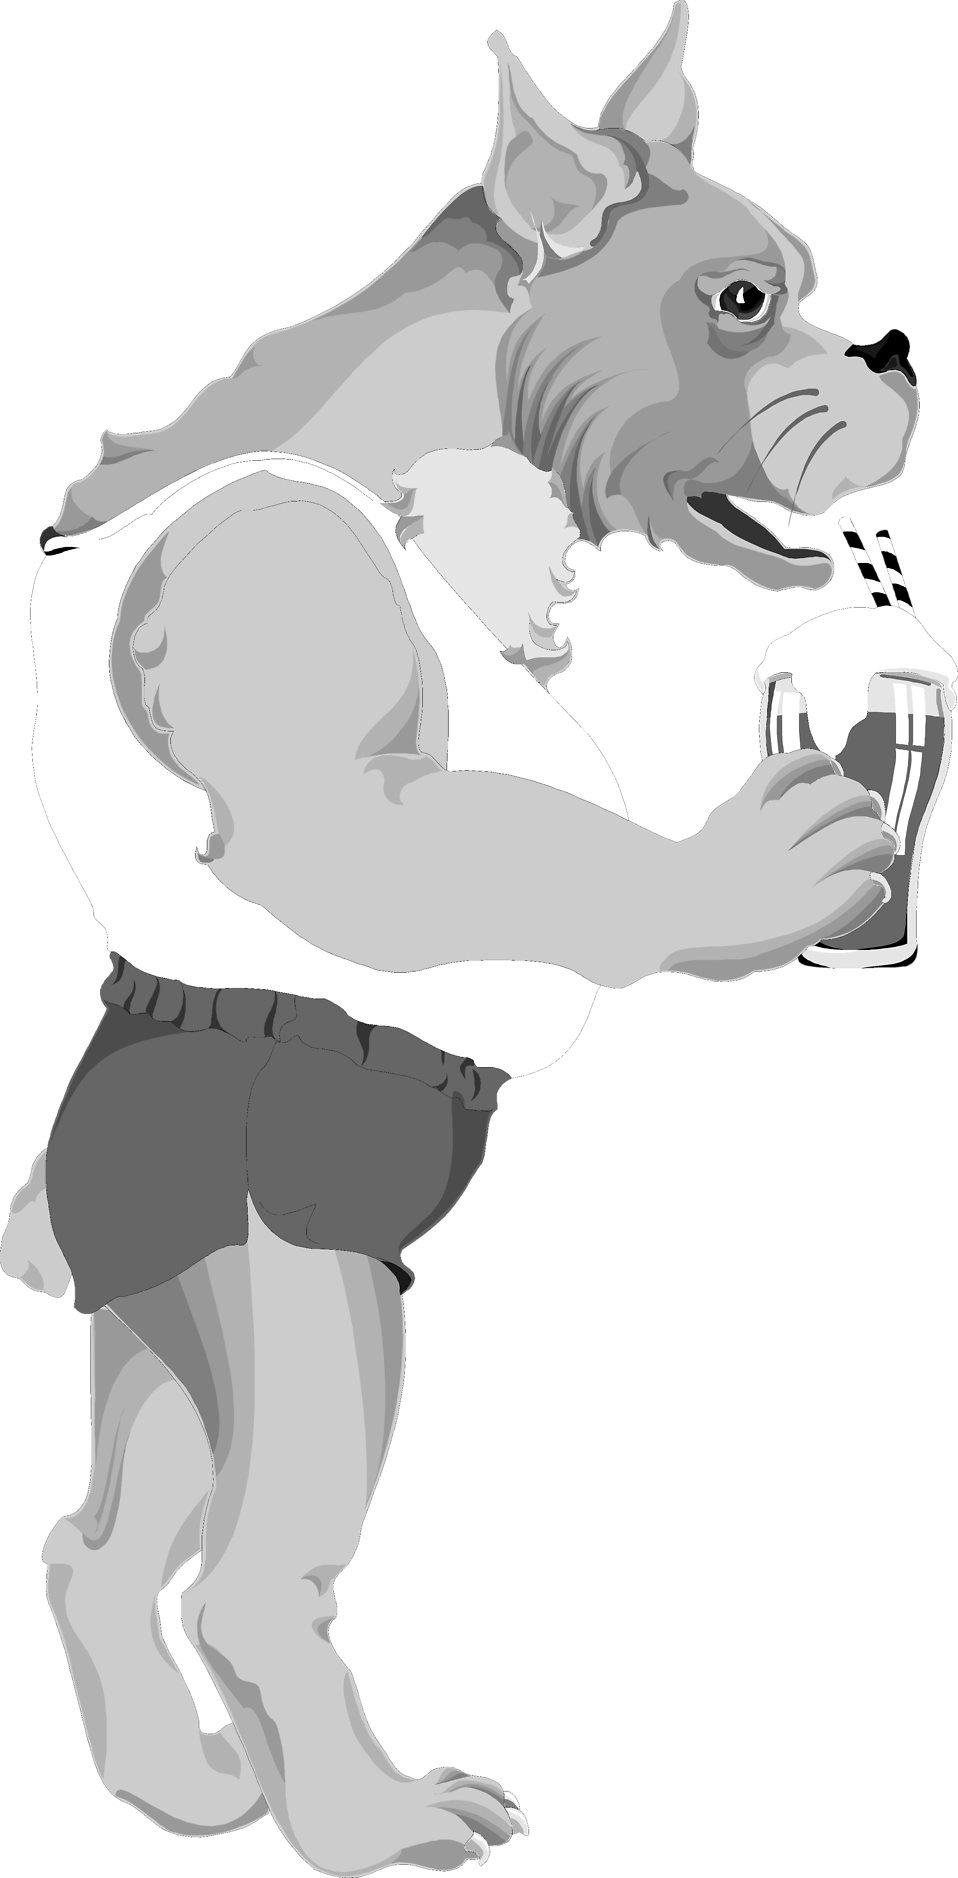 Clip Art Dog Food. Illustration of a dog drinking